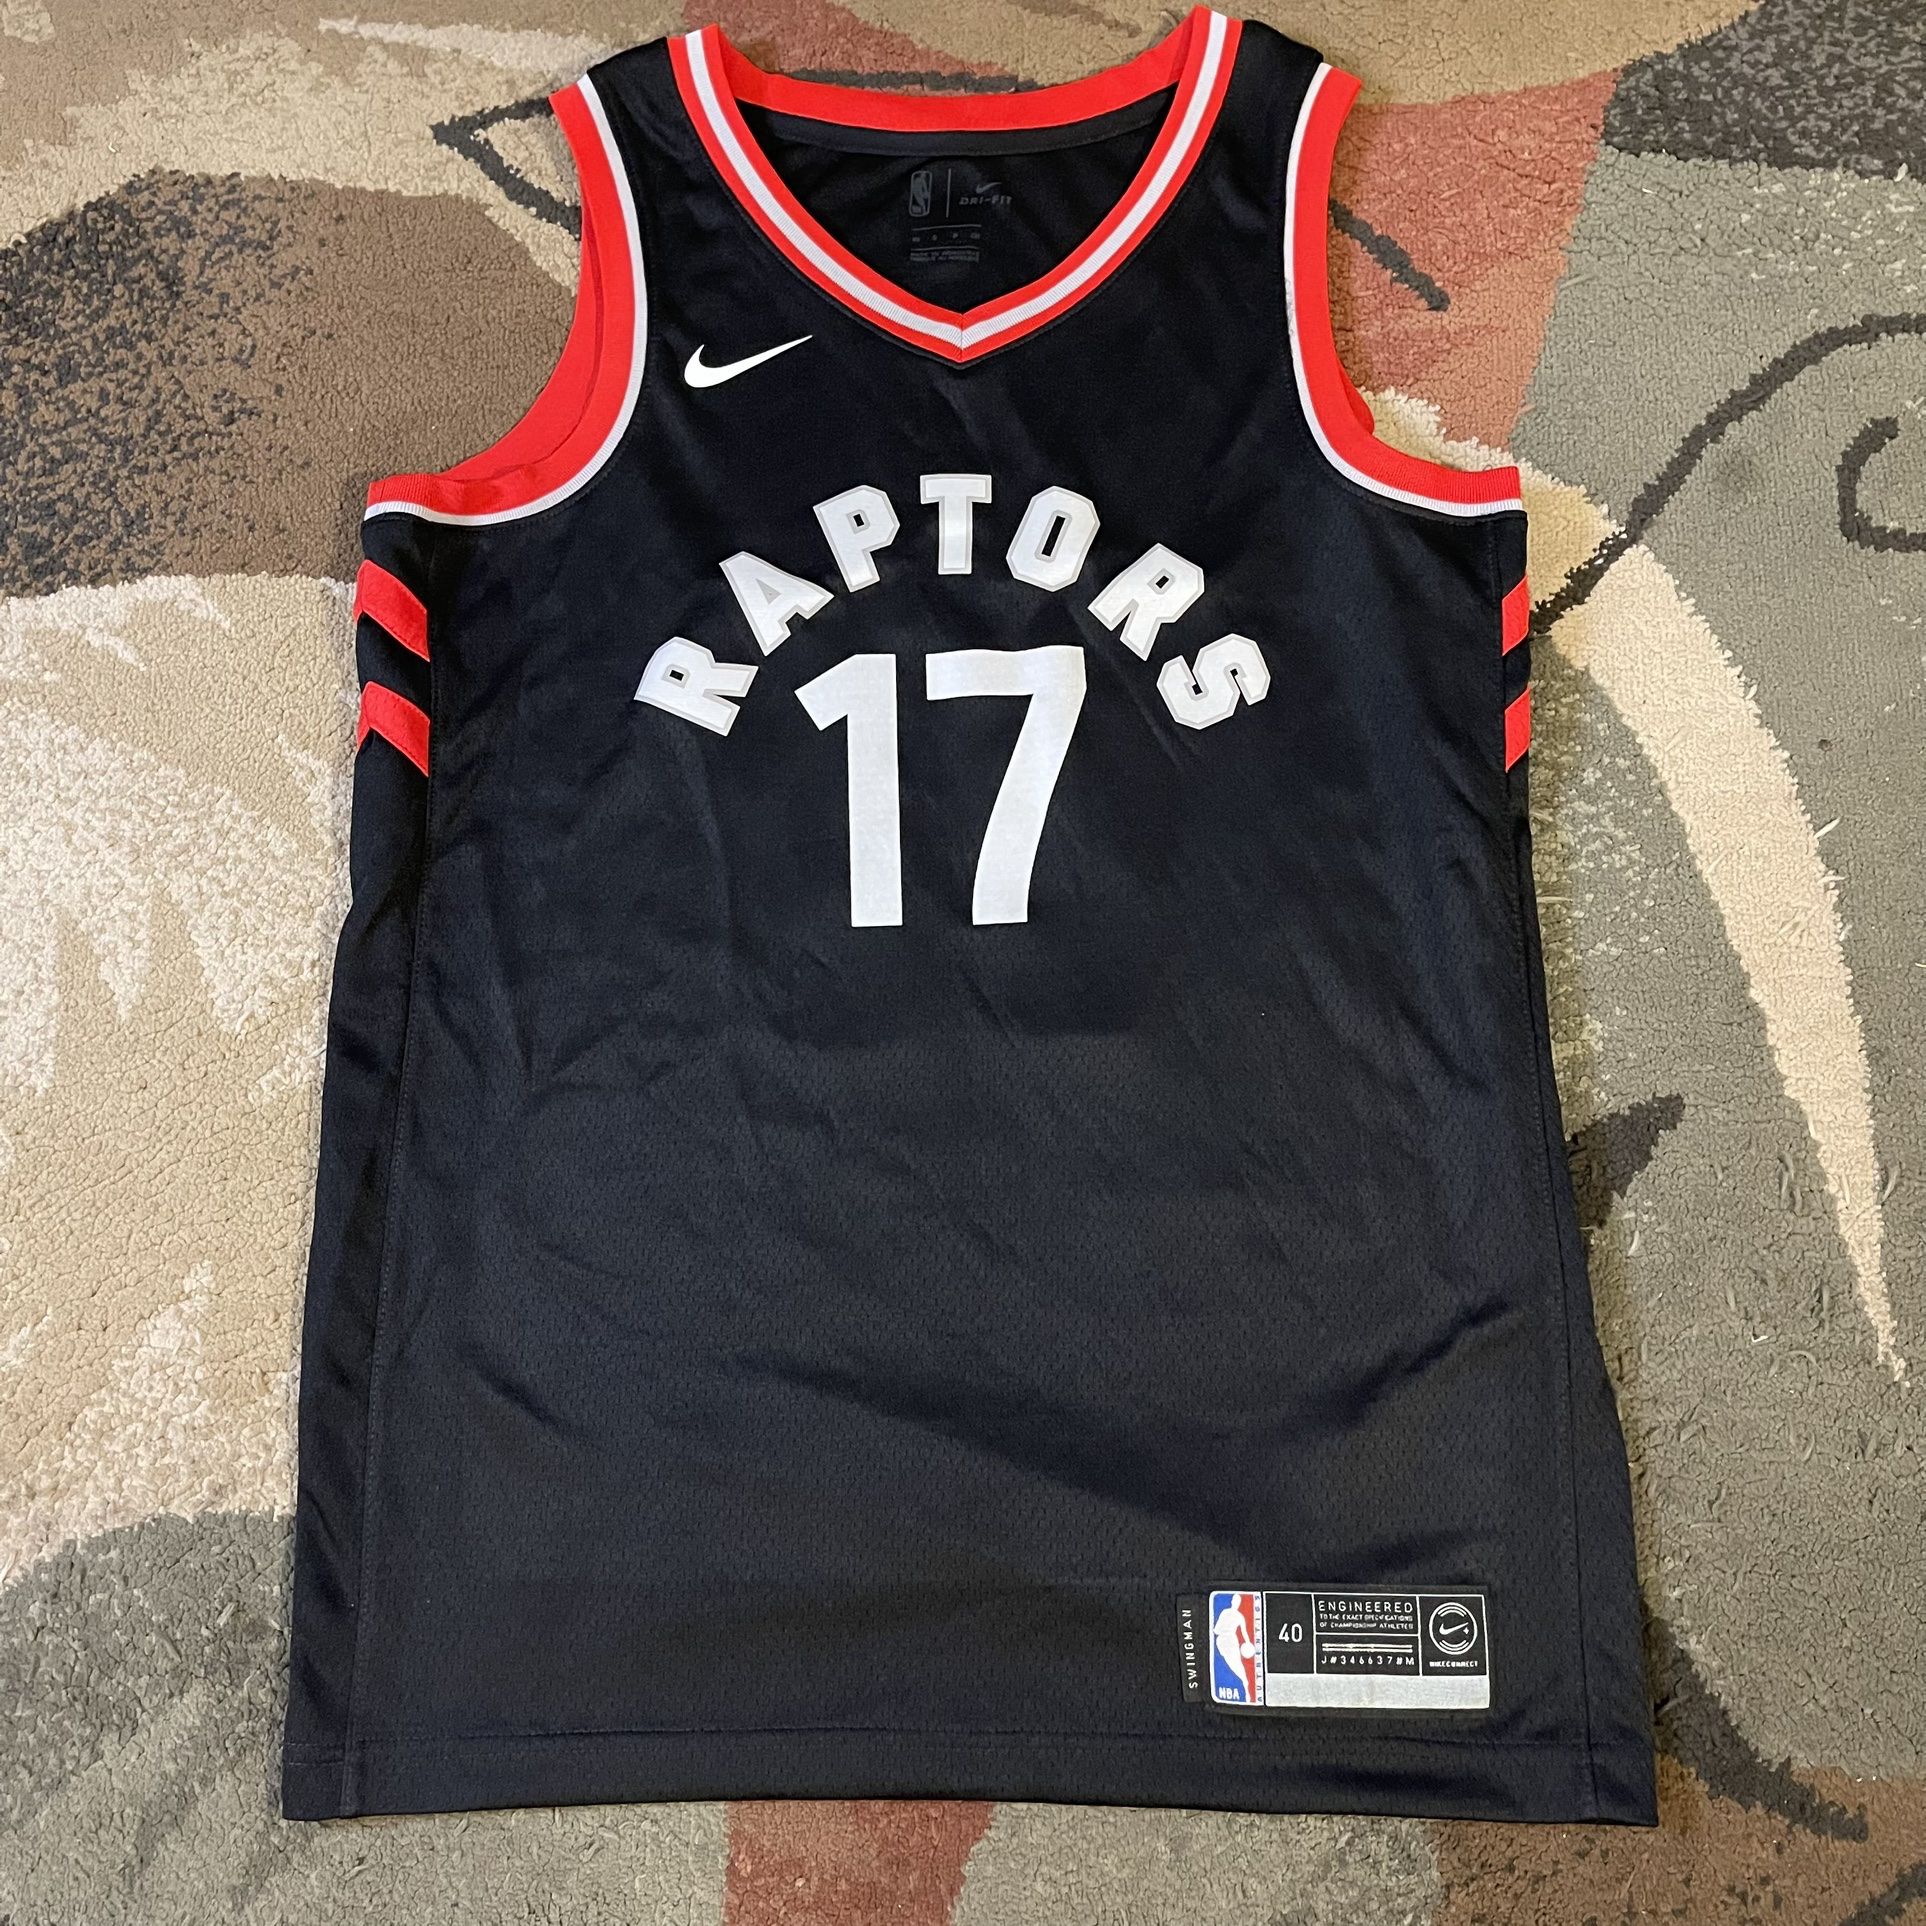 Nike Men's Toronto Raptors NBA Shirts for sale